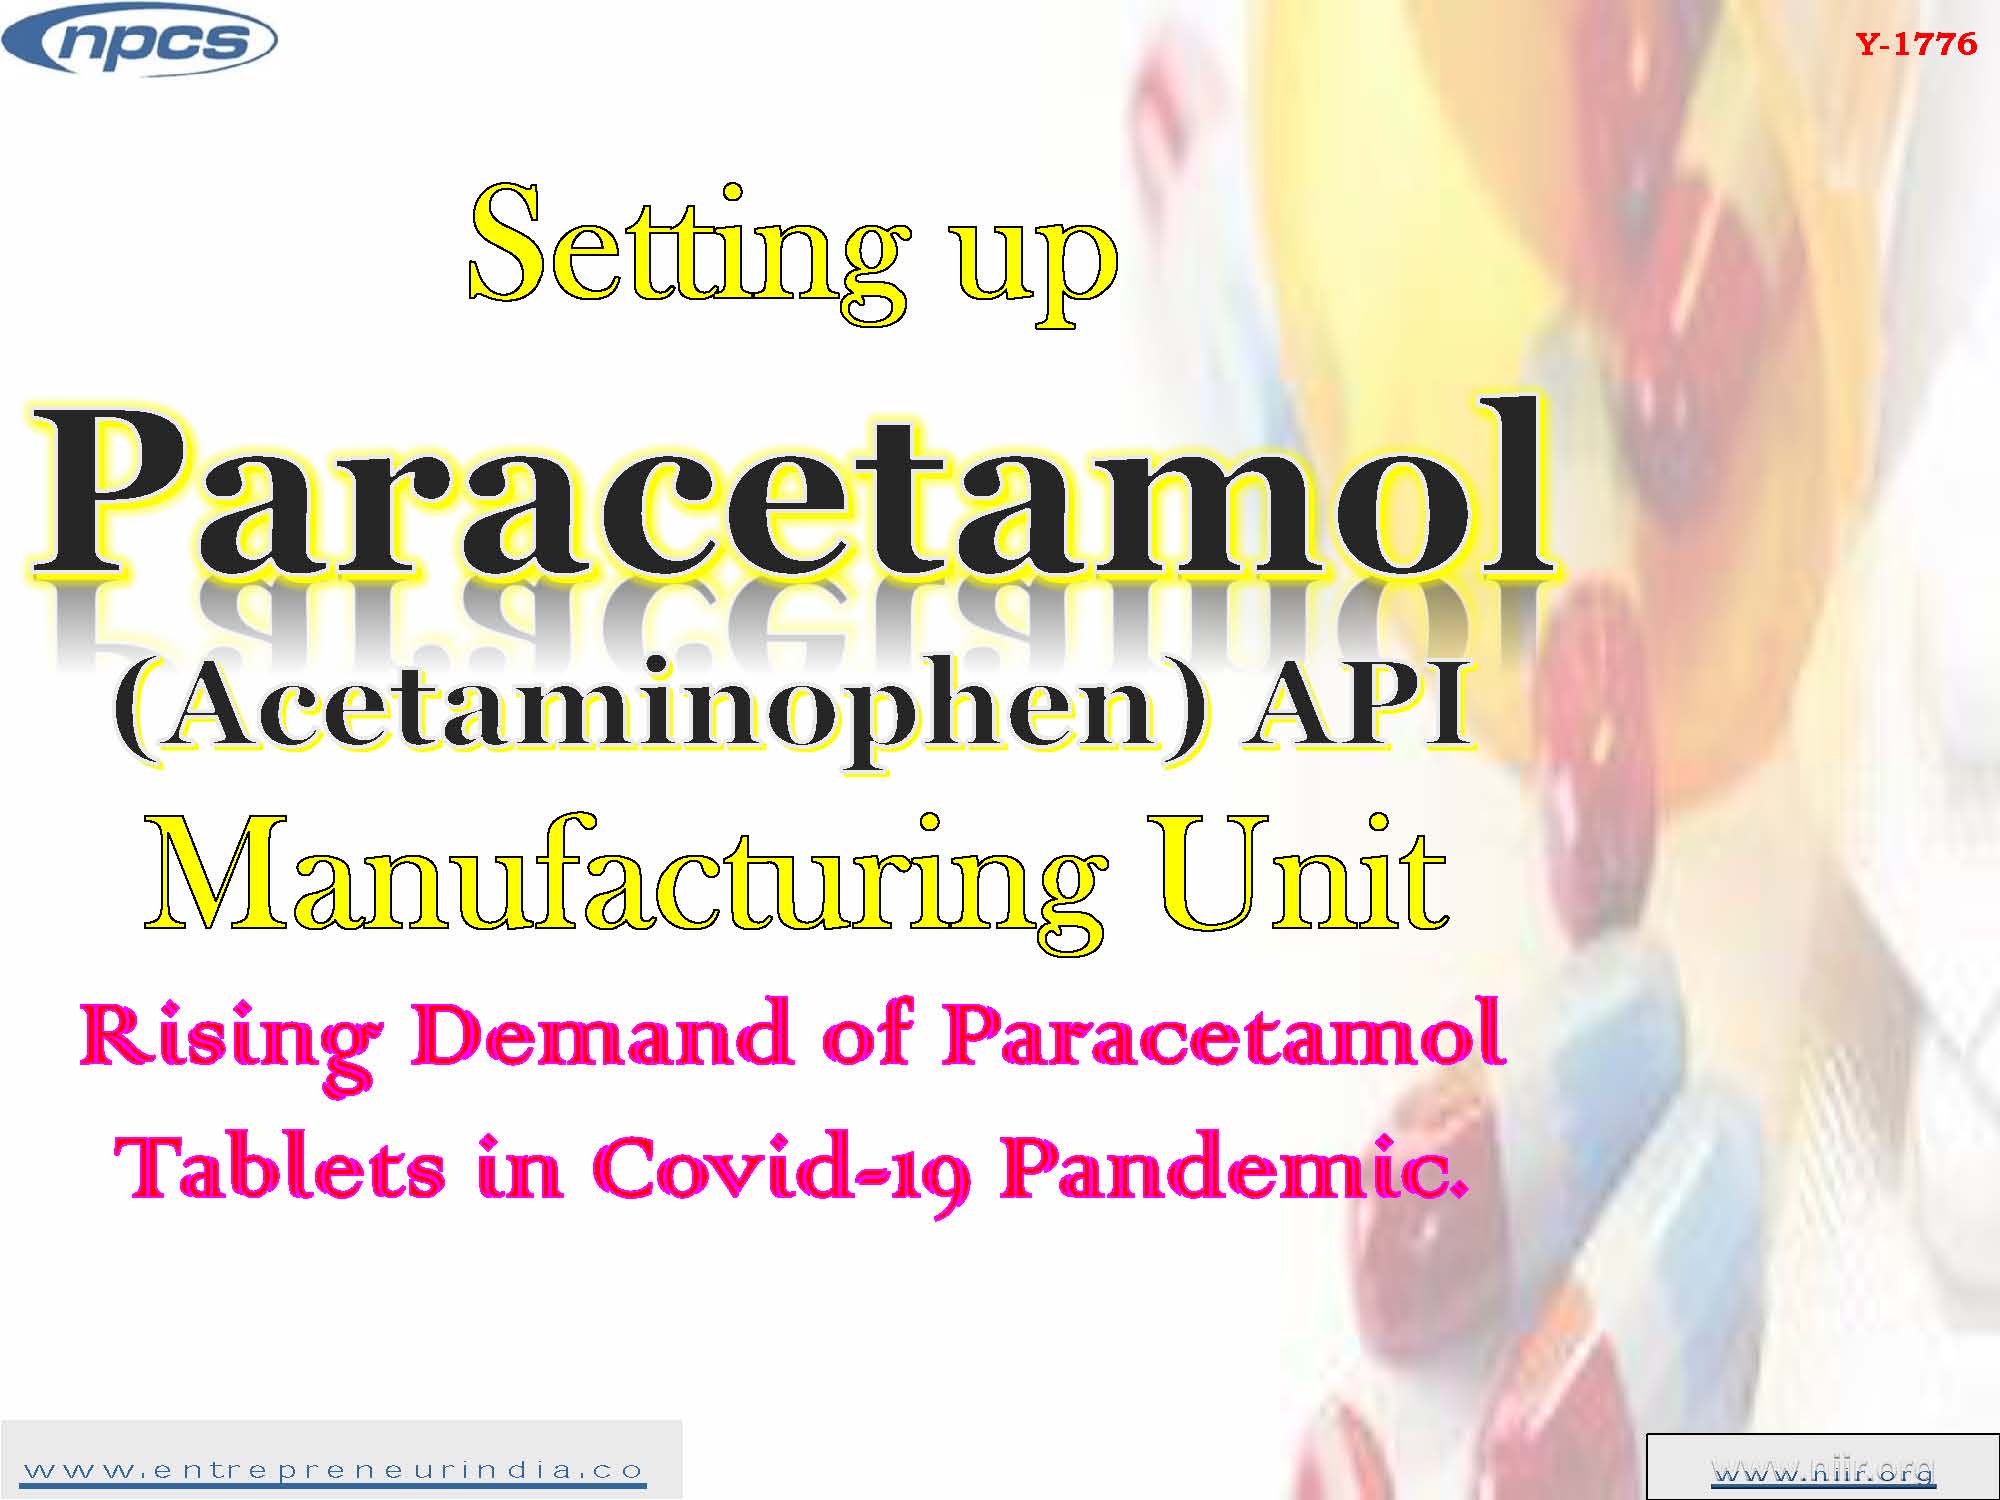 Setting up Paracetamol Acetaminophen API Manufacturing Unit Rising Demand of Paracetamol Tablets in Covid-19 Pandemic